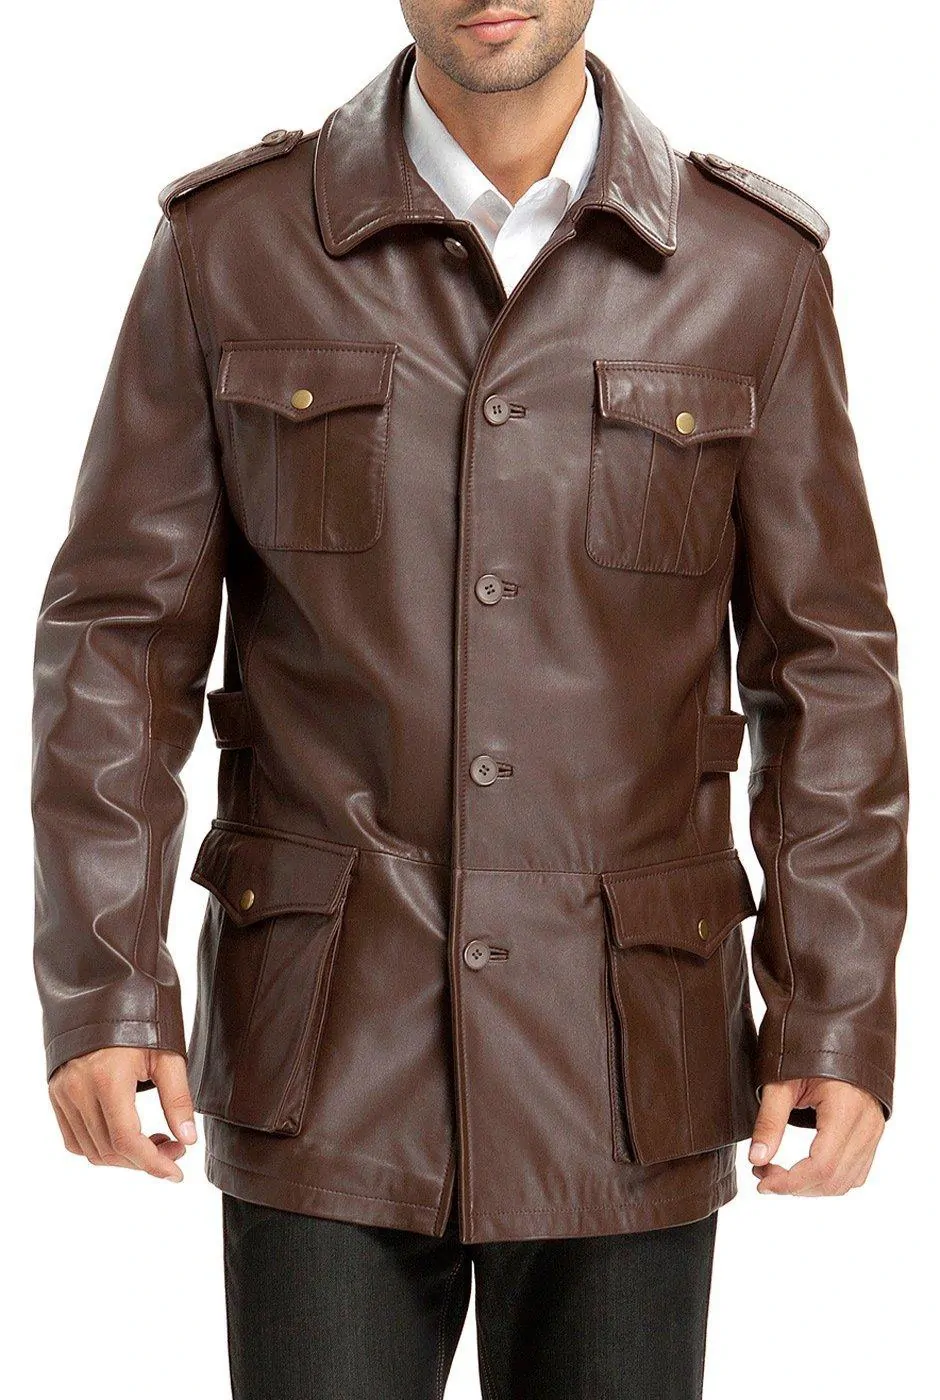 Mens Leather Jacket - LJM086